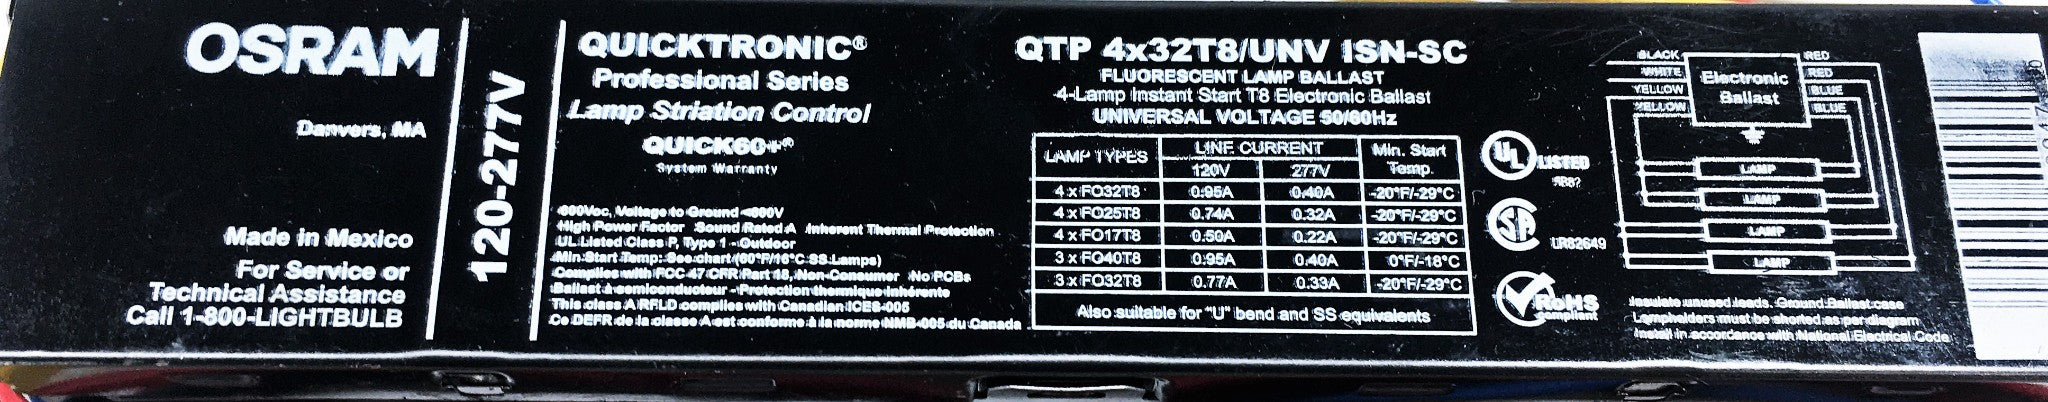 Osram Quicktronic Fluorescent Lamp Ballast QTP 4x32T8/UNV ISN-SC [Lot of 2] NOS